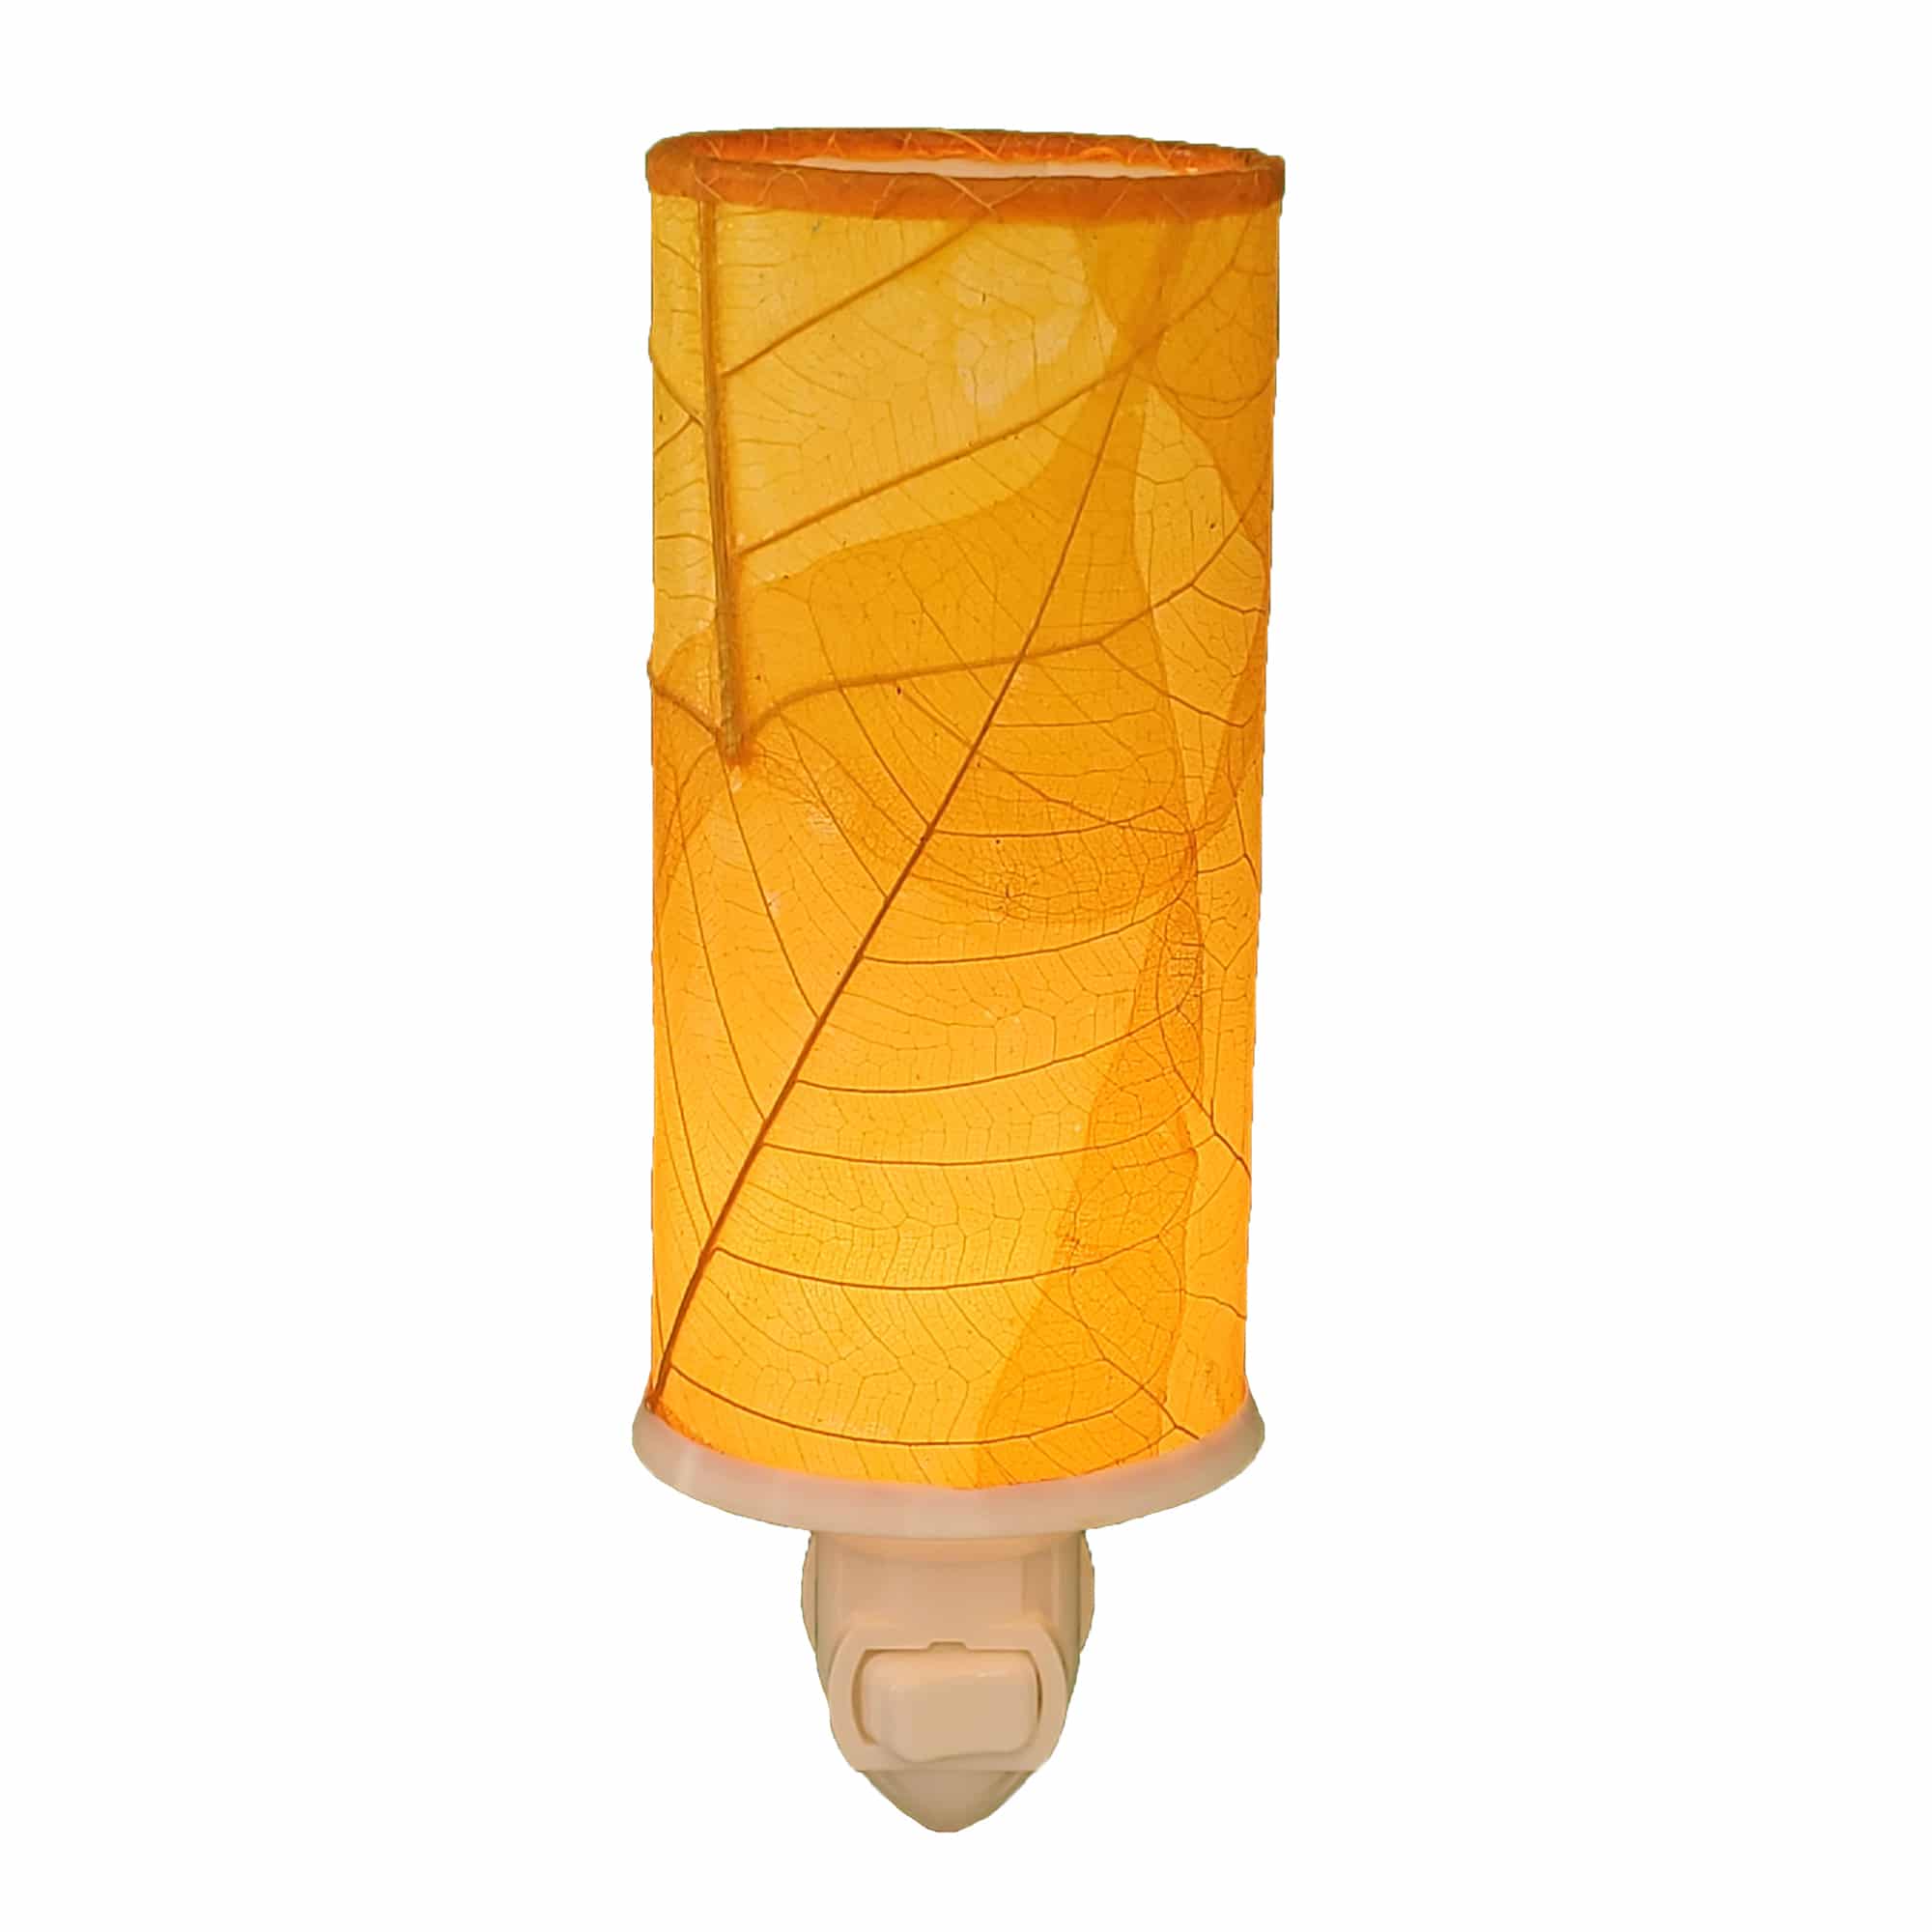 Cylinder Recycled Leaf Night Light - Orange - Alternatives Global Marketplace